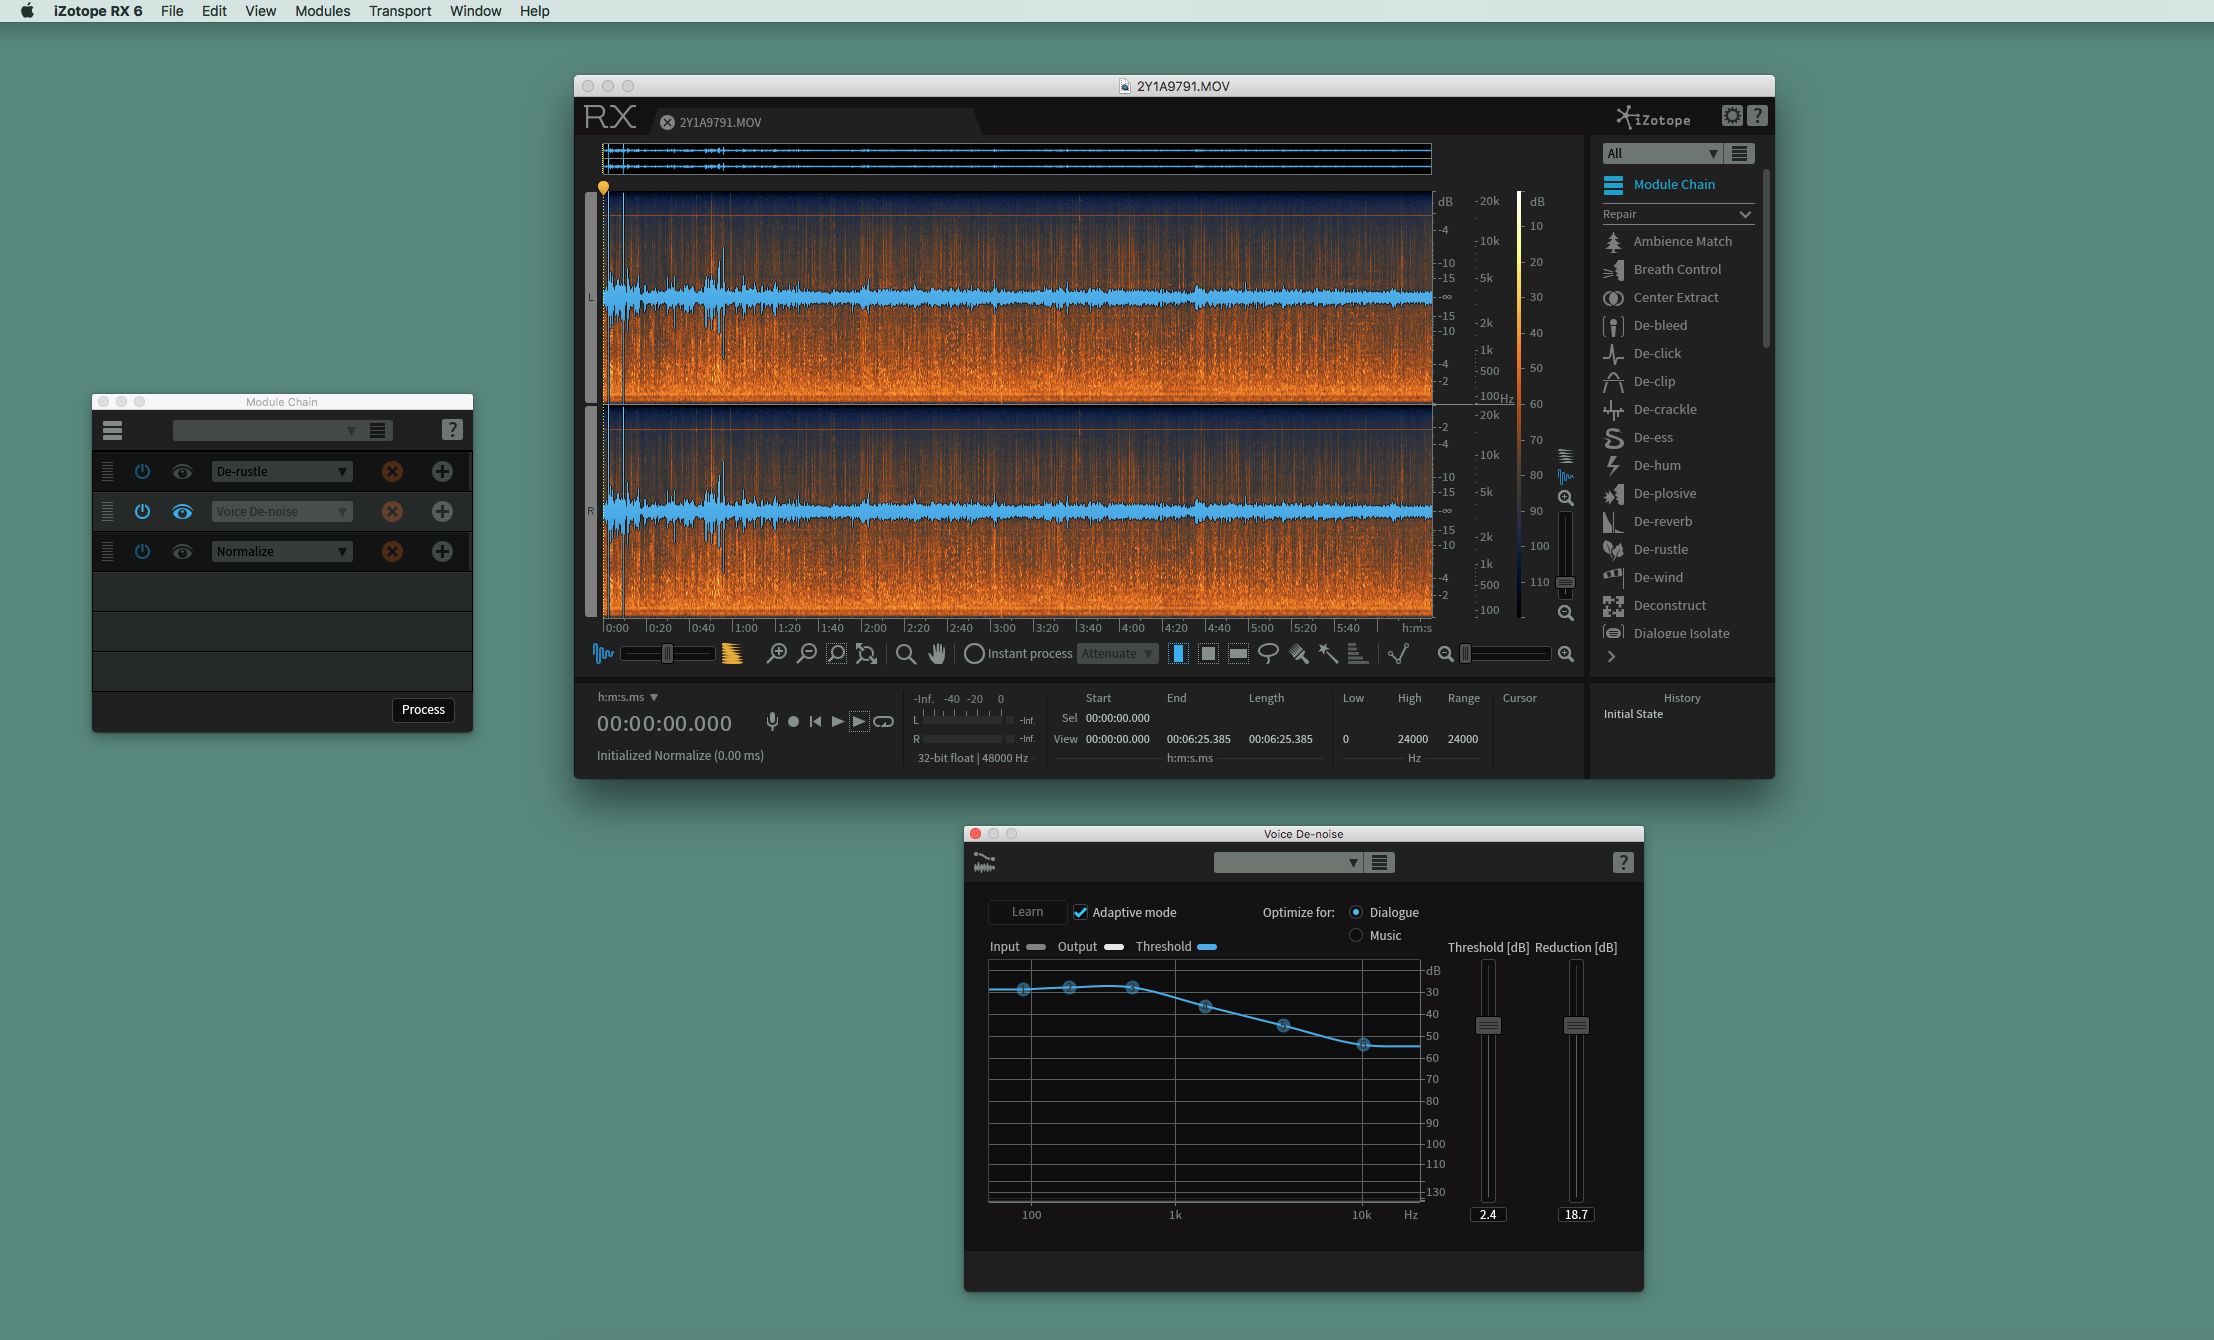 Izotope rx 6 audio editor download